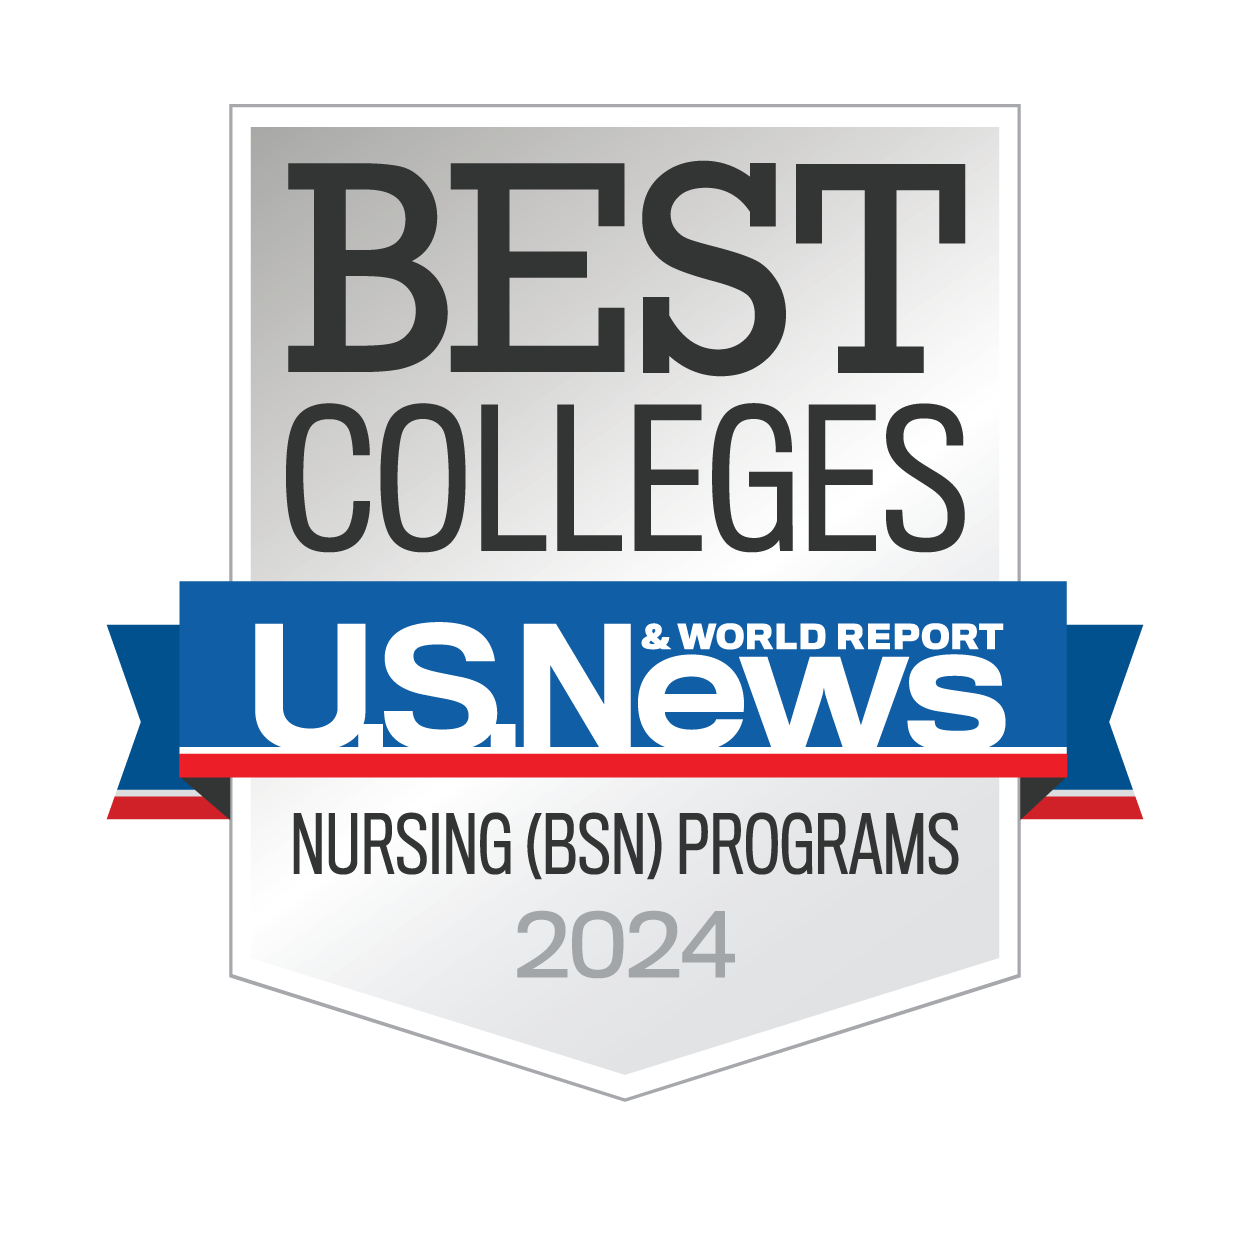 Best Colleges Nursing (BSN) Programs 2024 award badge